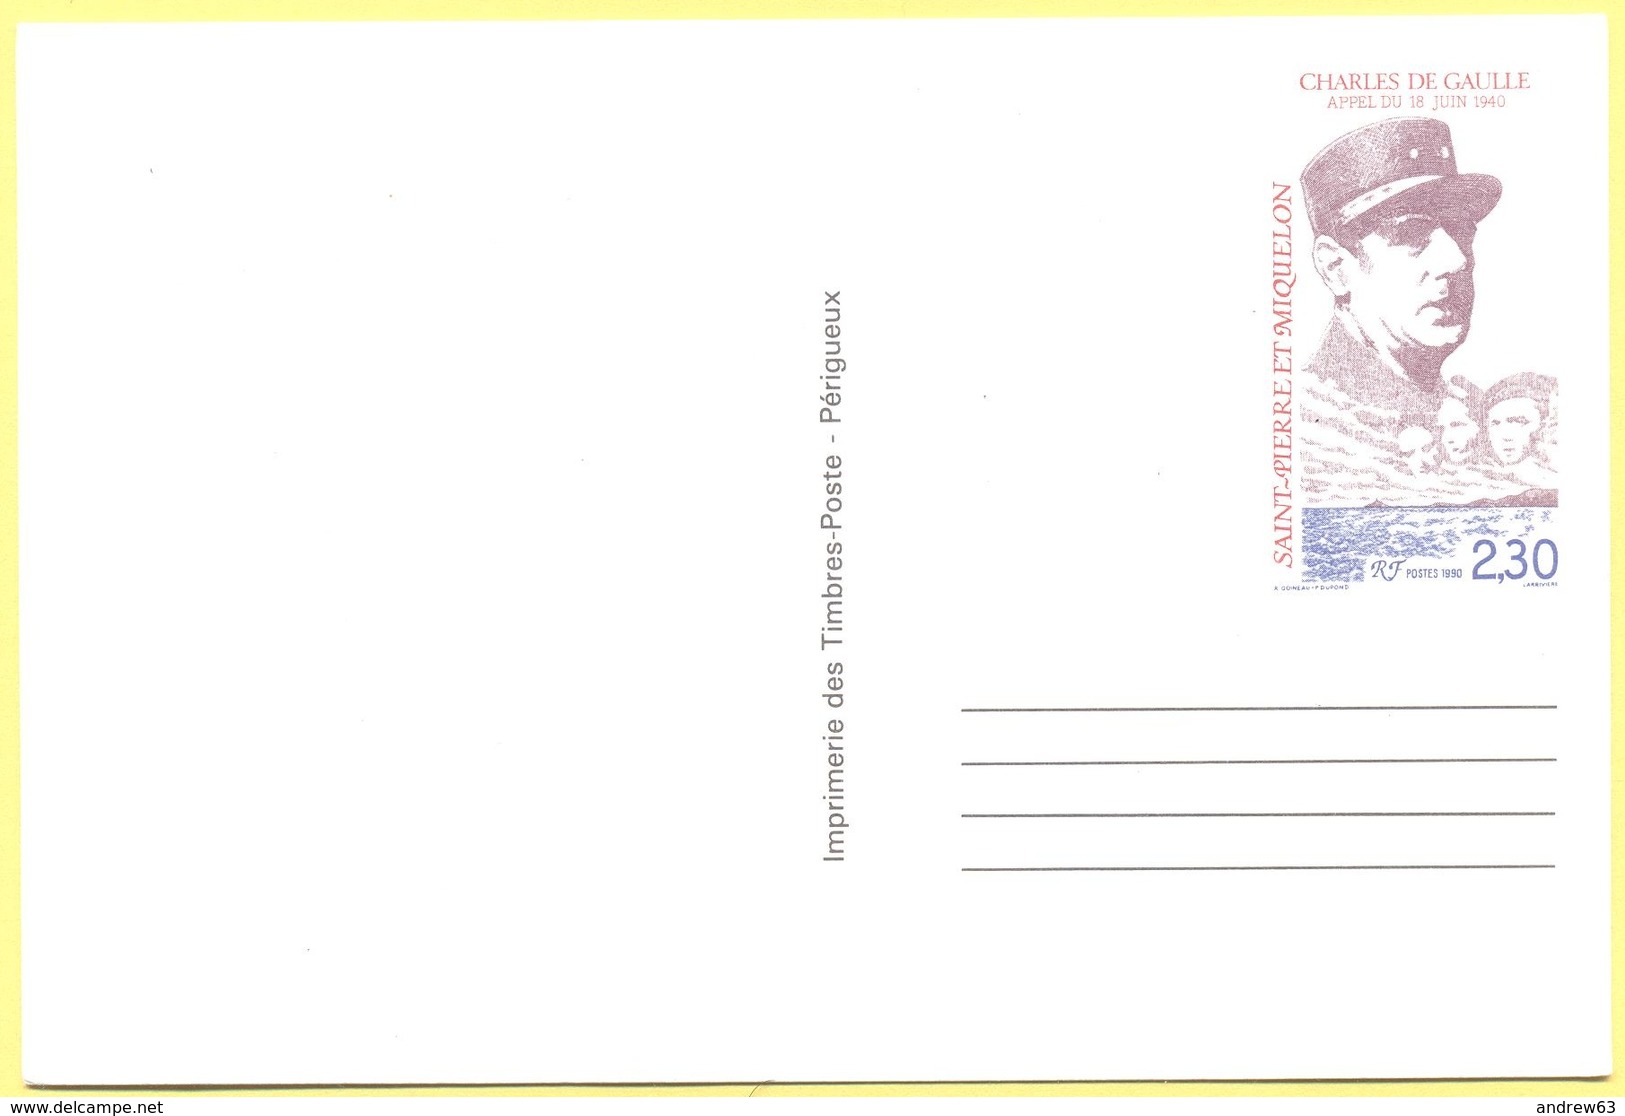 St.Pierre & Miquelon - 2,30 Charles De Gaulle - Carte Postale - Intero Postale - Entier Postal - Postal Stationery - Not - Interi Postali